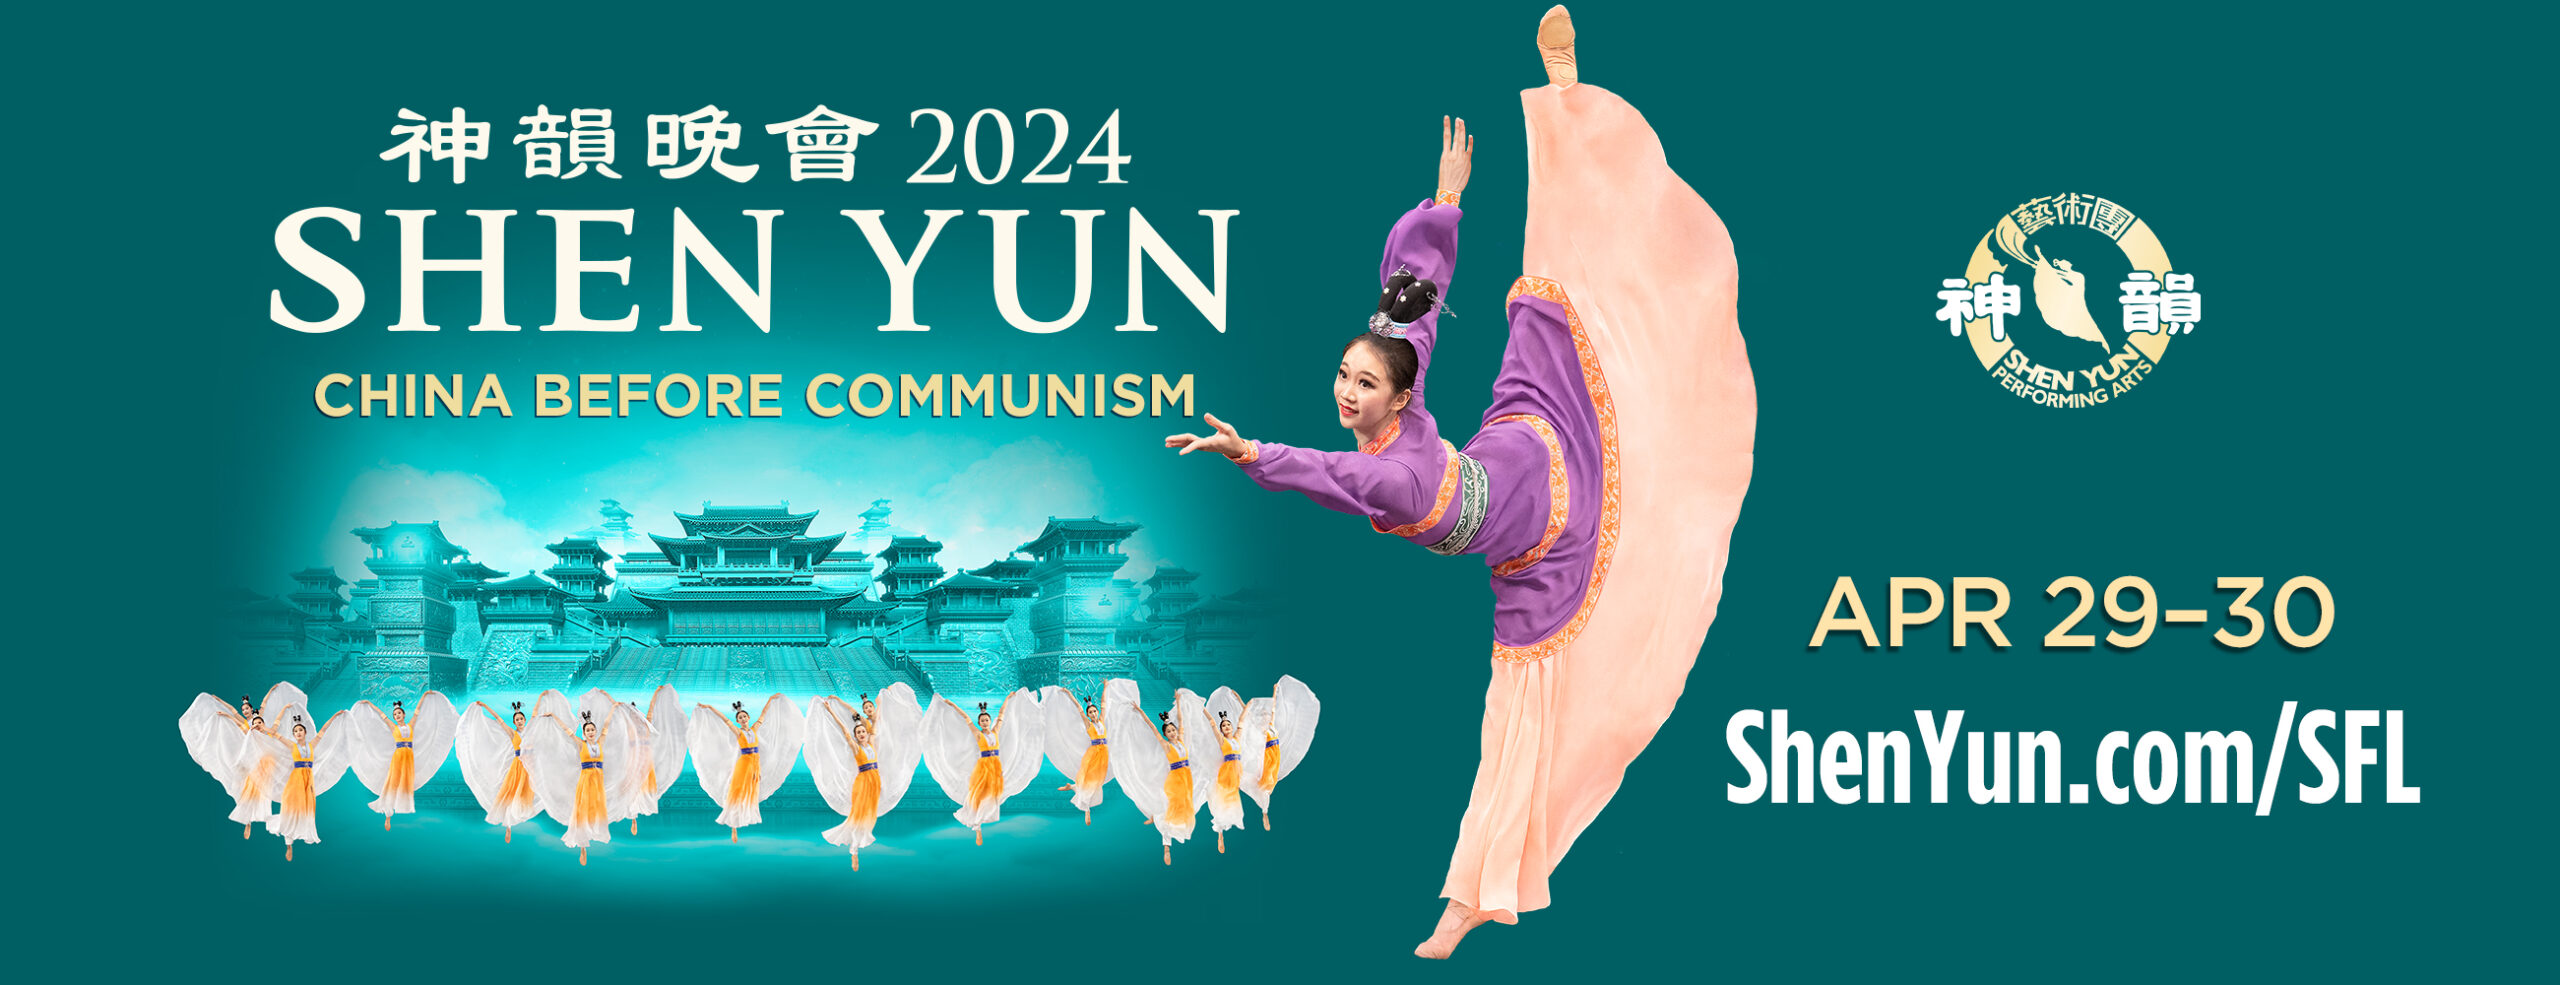 <center>Falun Dafa Association of Florida </br>Presents</br> Shen Yun 2024 - China Before Communism</center>